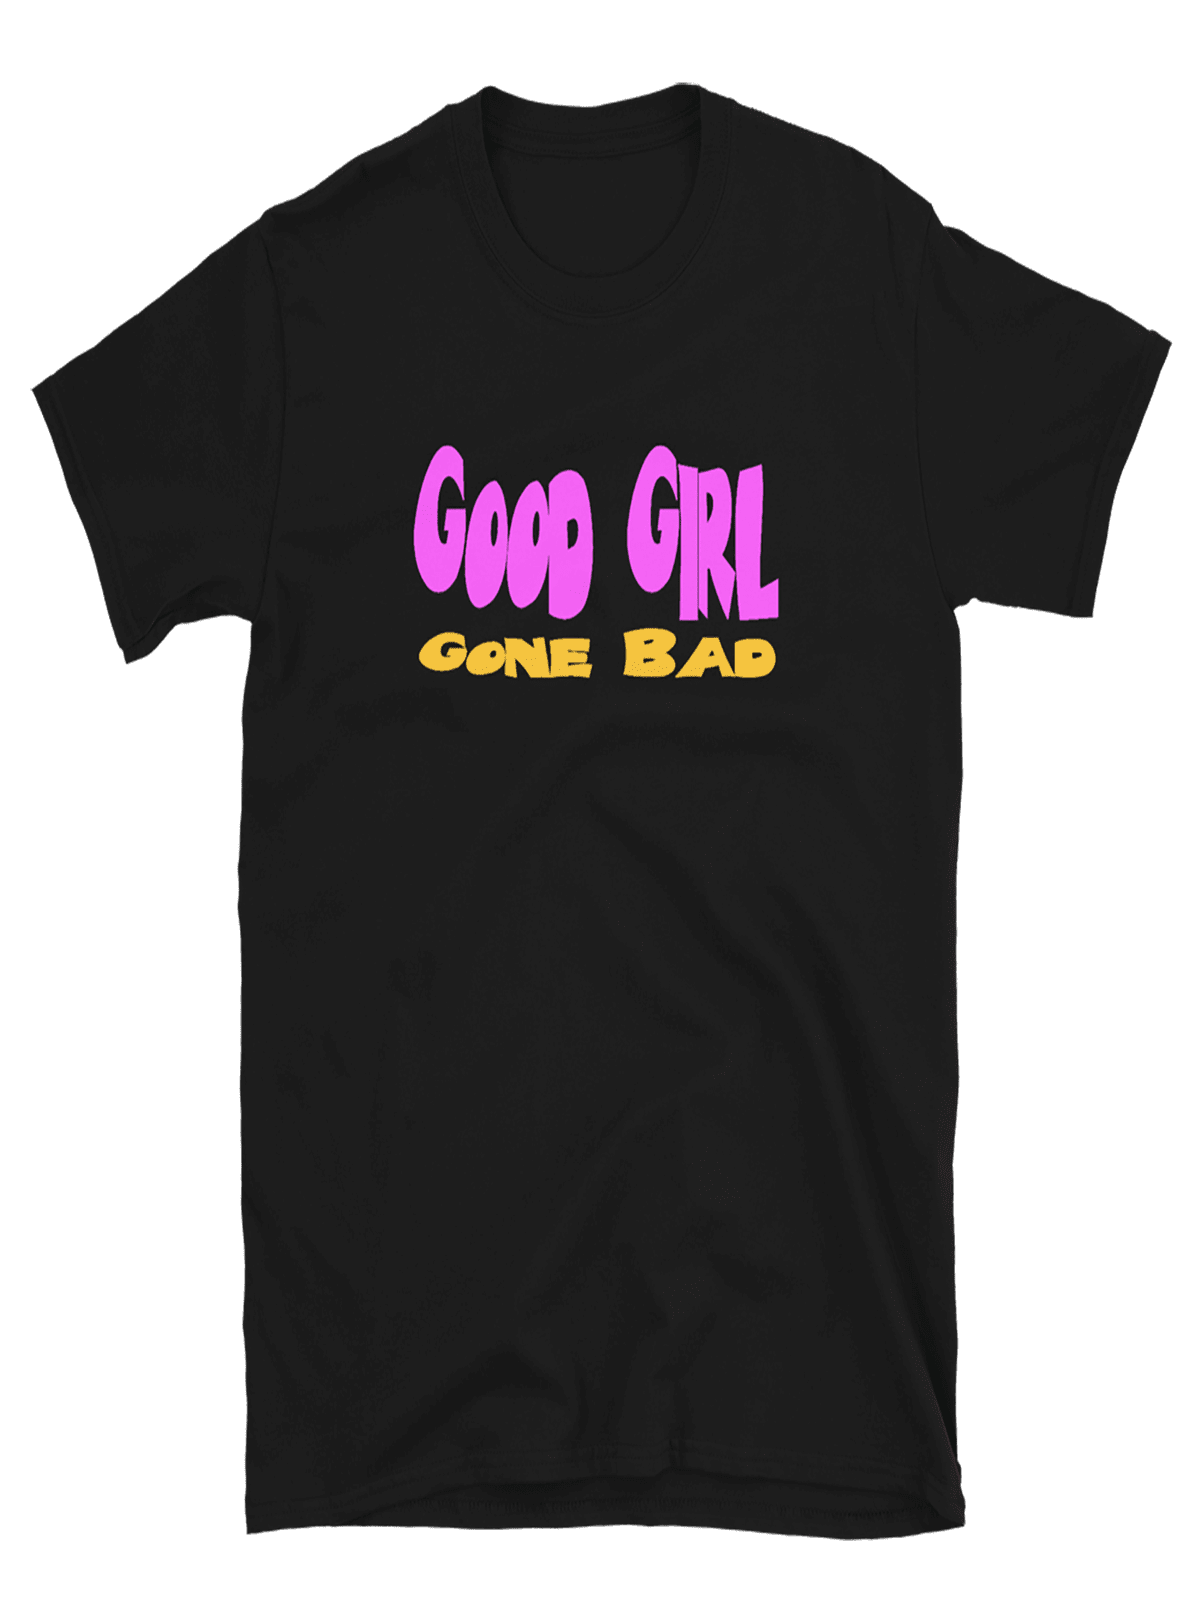 Good Girl Gone Bad - T-Shirt